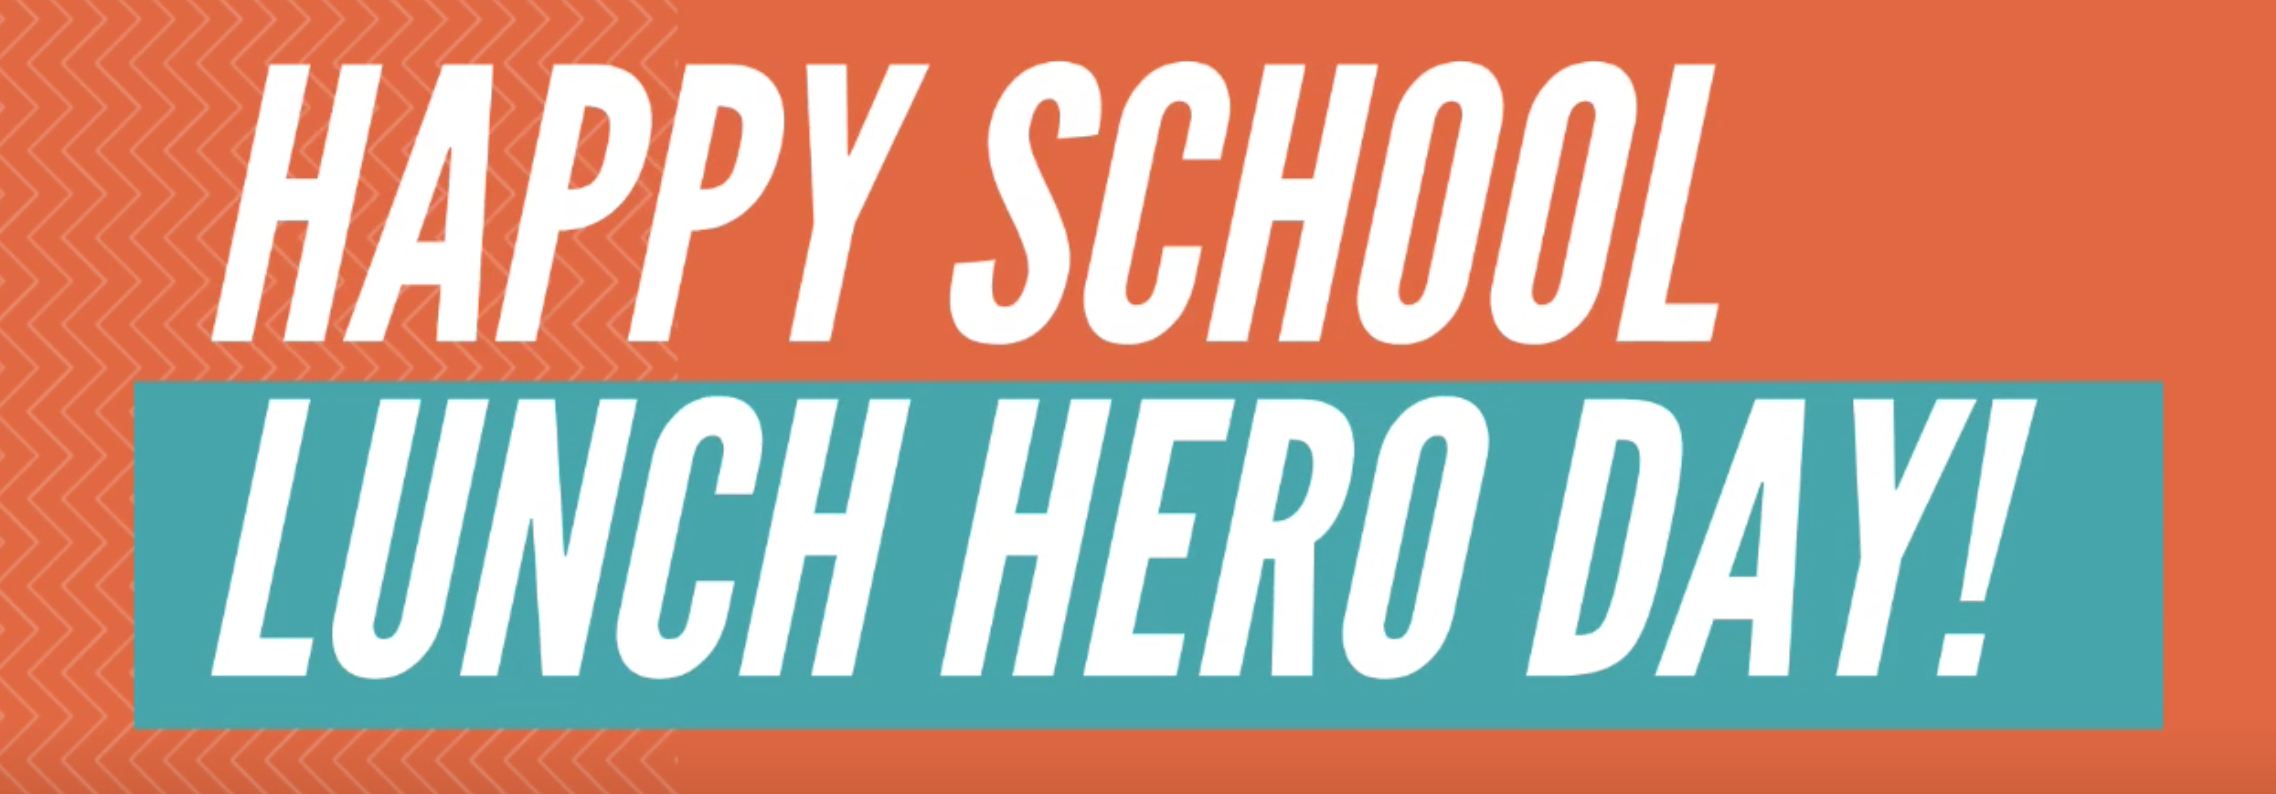 school-lunch-hero-day-marysville-pilchuck-high-school